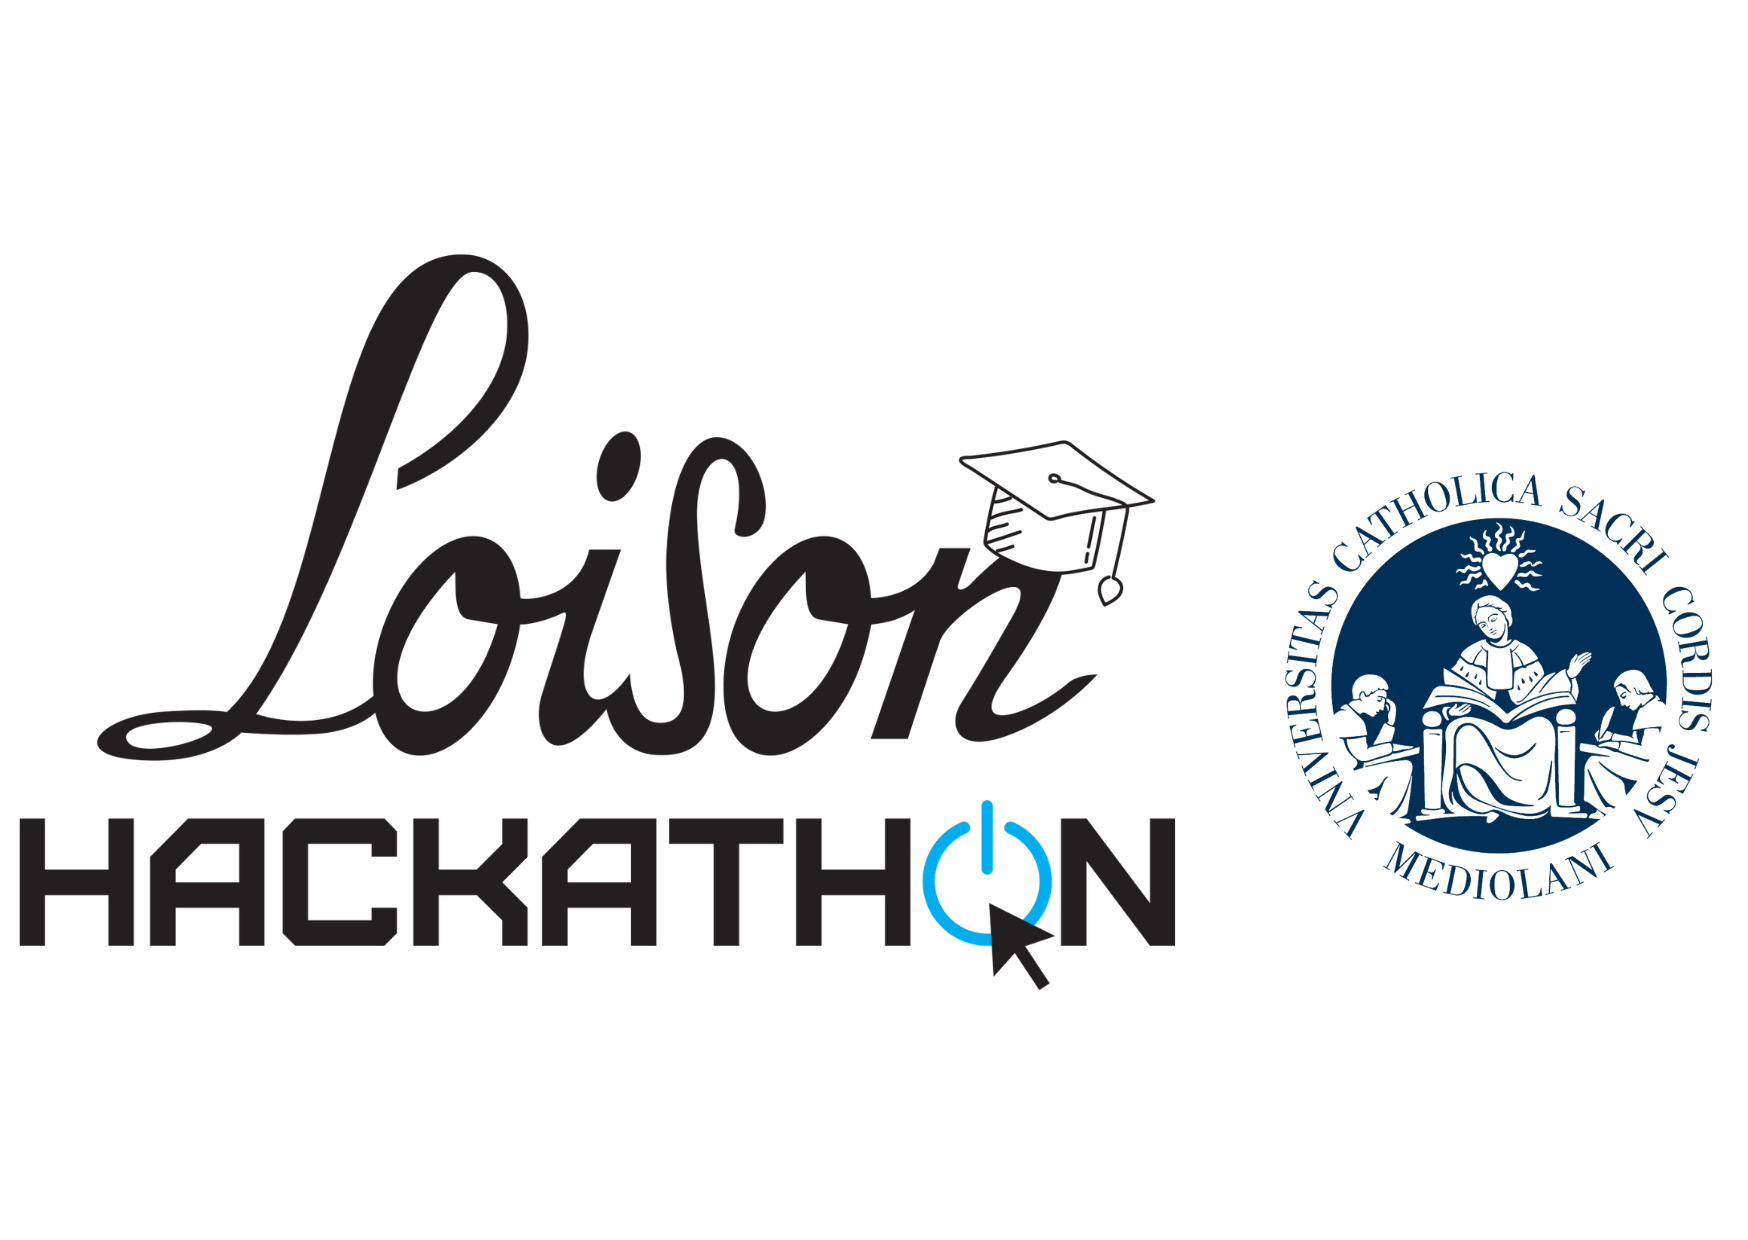 2022 Loison x Unicatt Milano - Hackathon